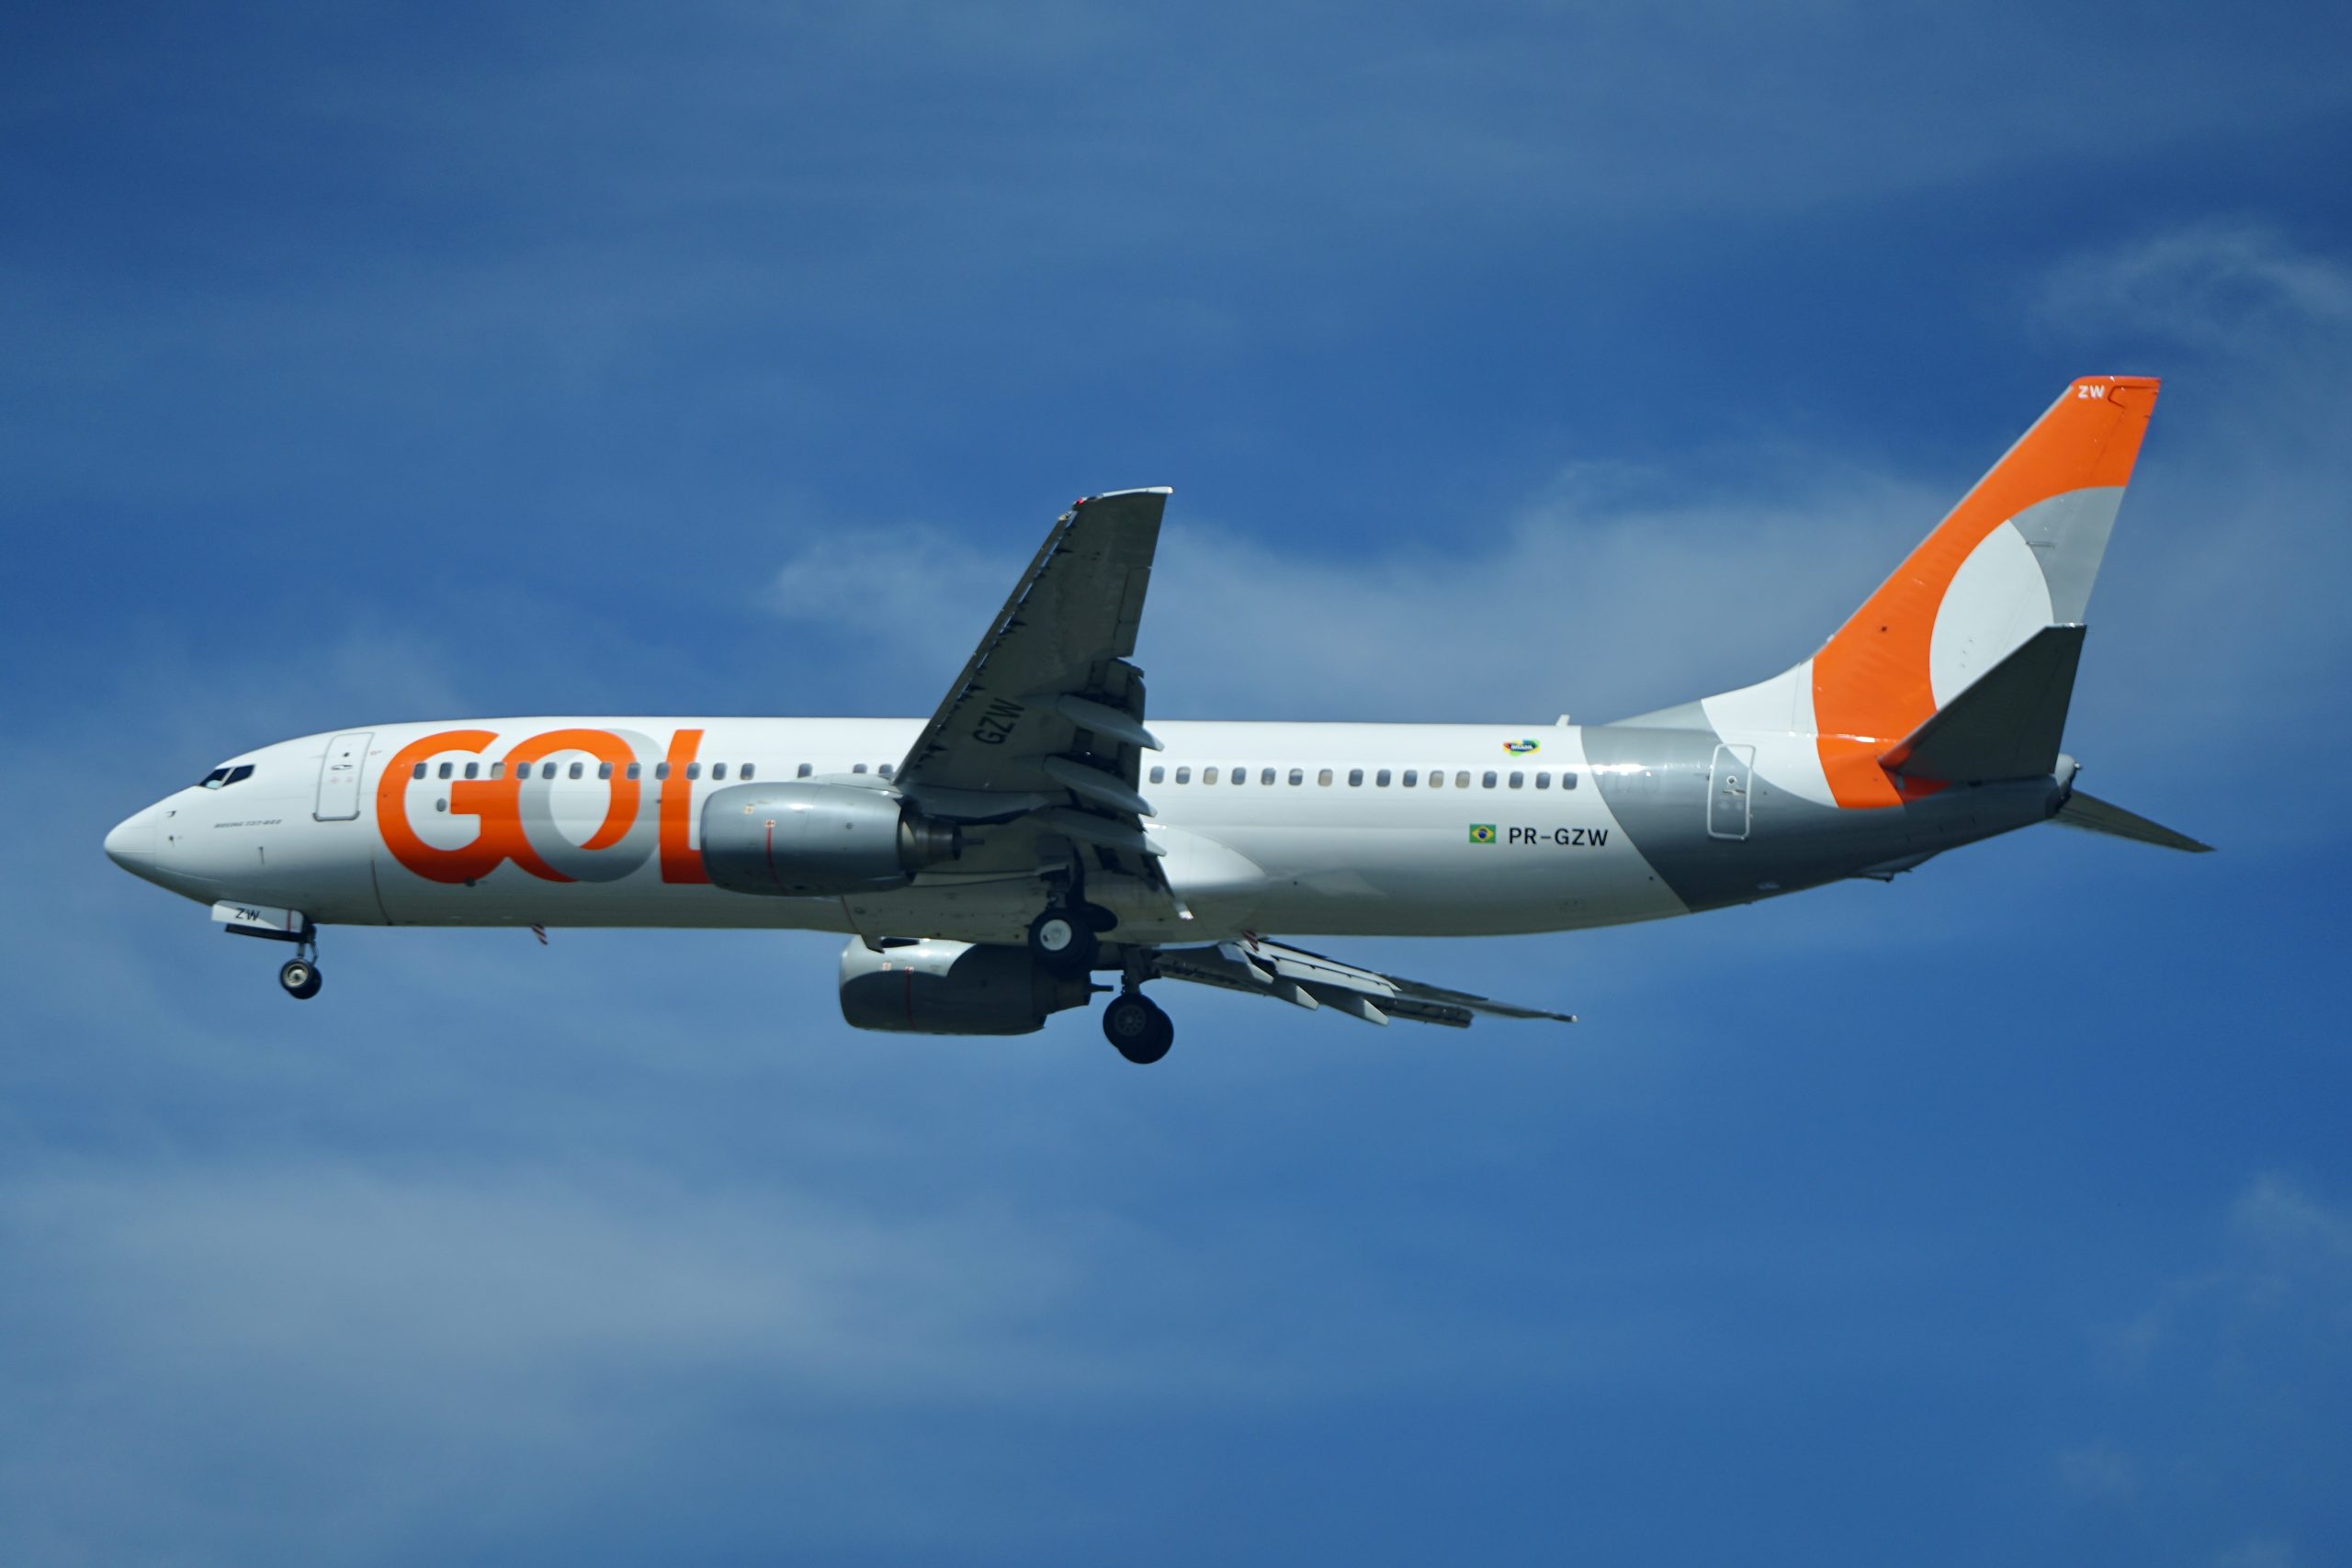 PR-GZW: o único 737-800 sem winglets na frota da Gol